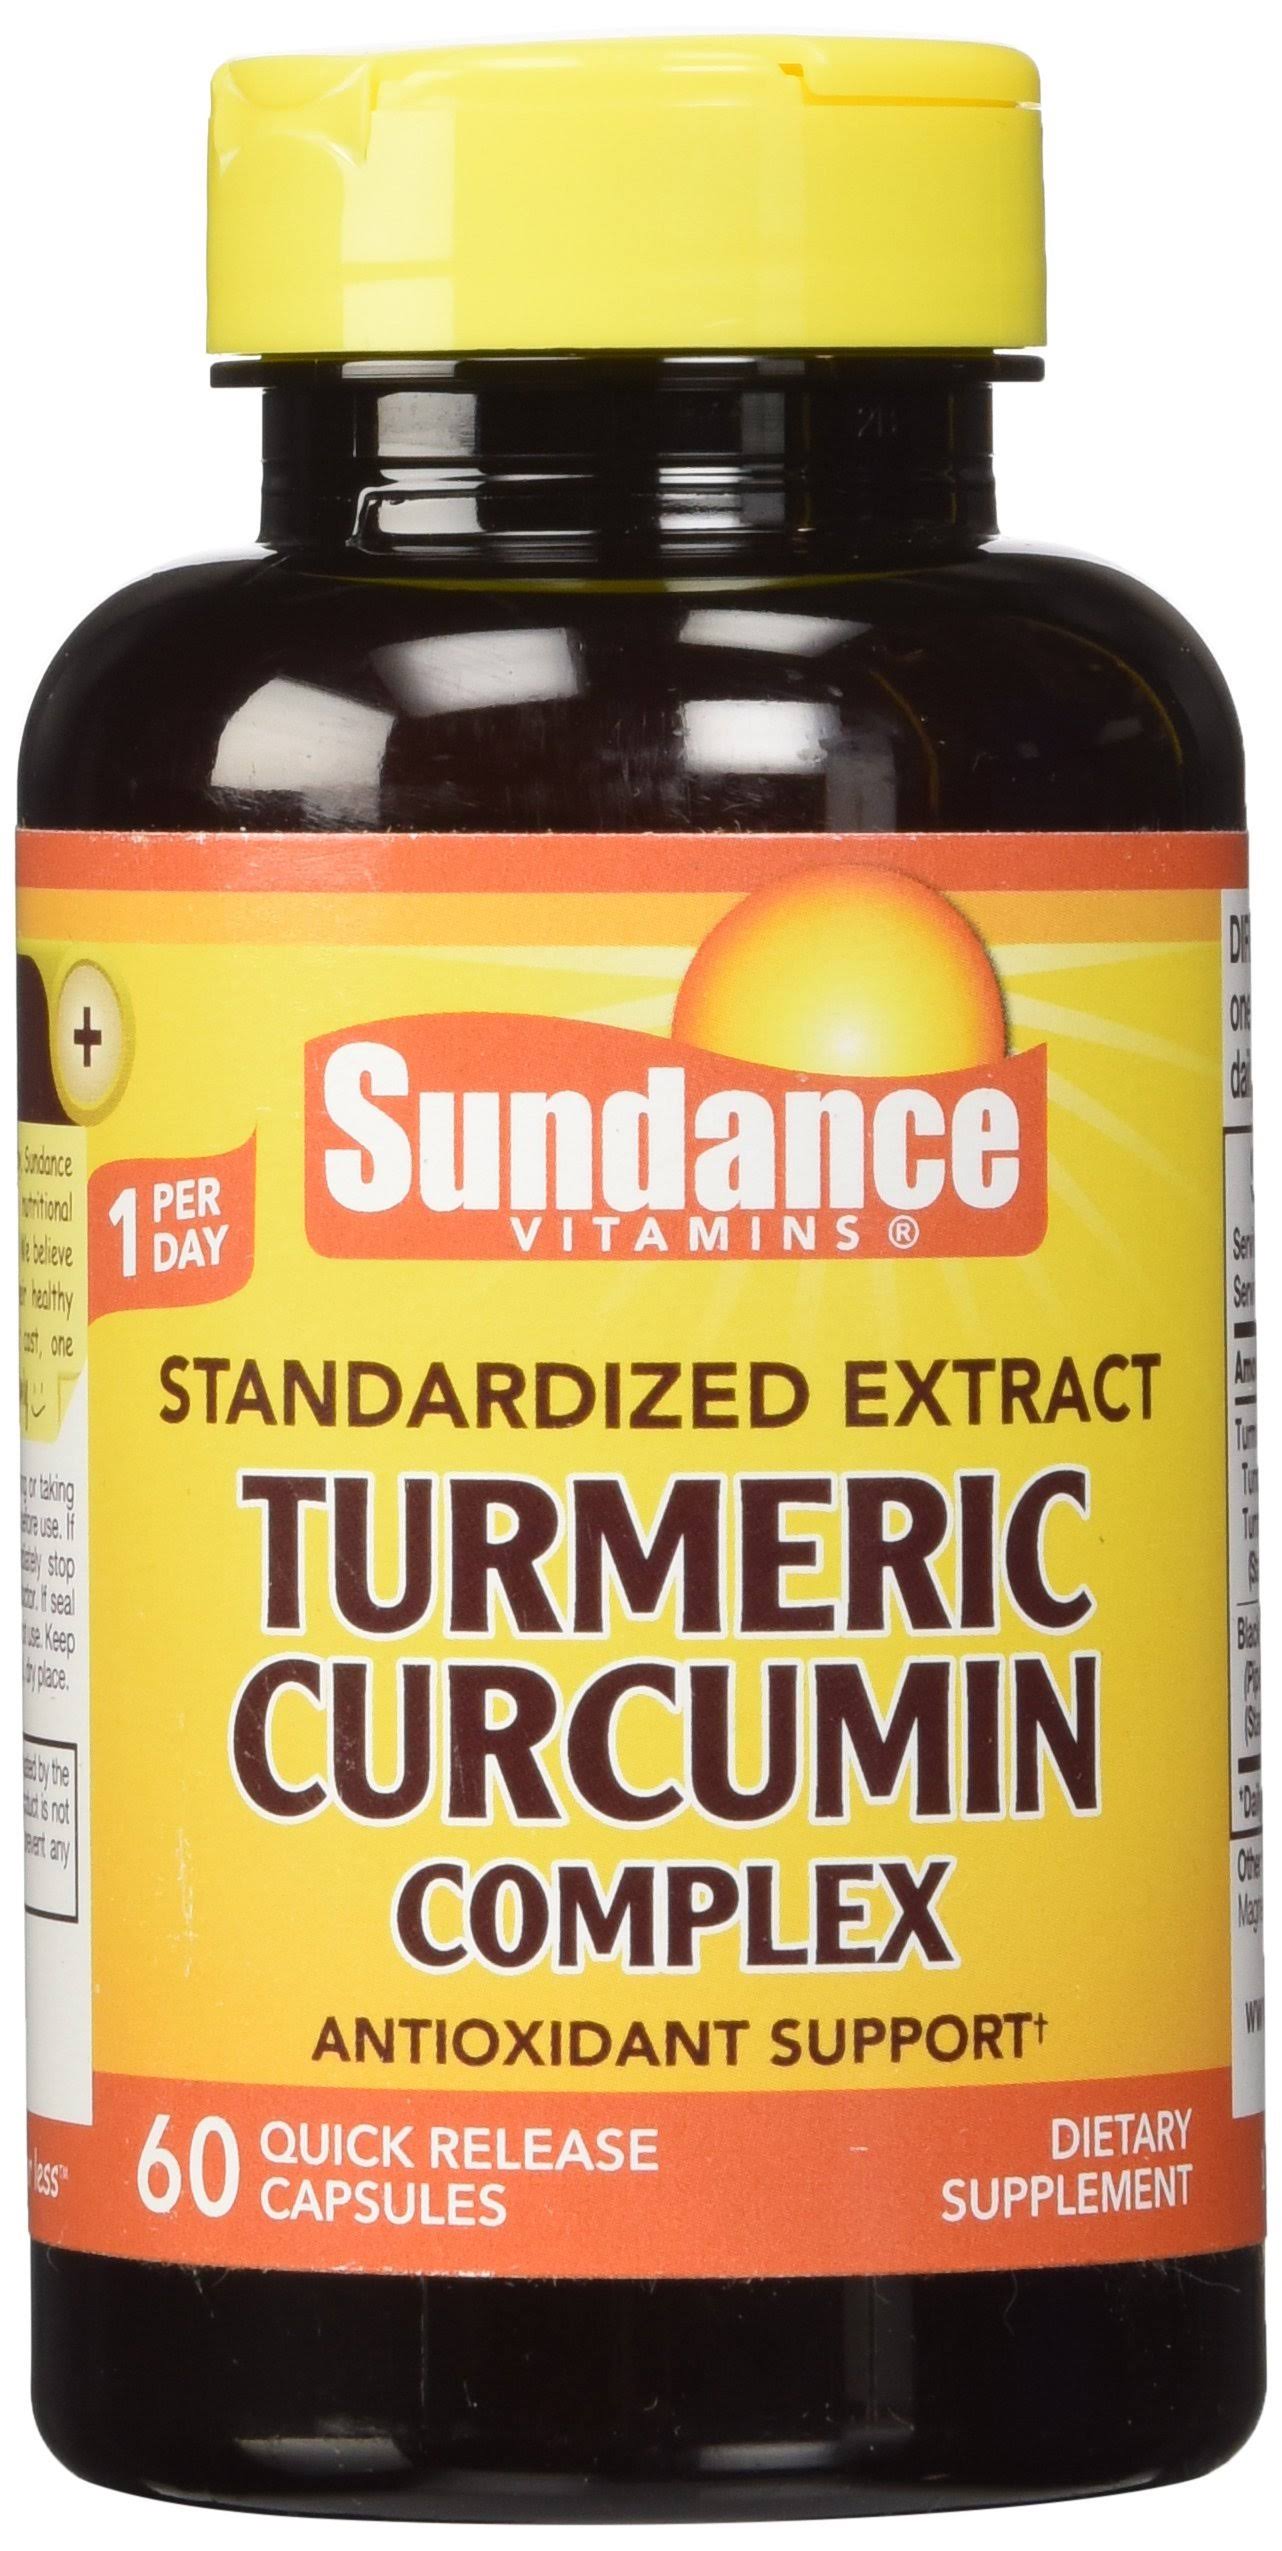 Sundance Turmeric Curcumin Complex Dietary Supplement - 60 Capsules